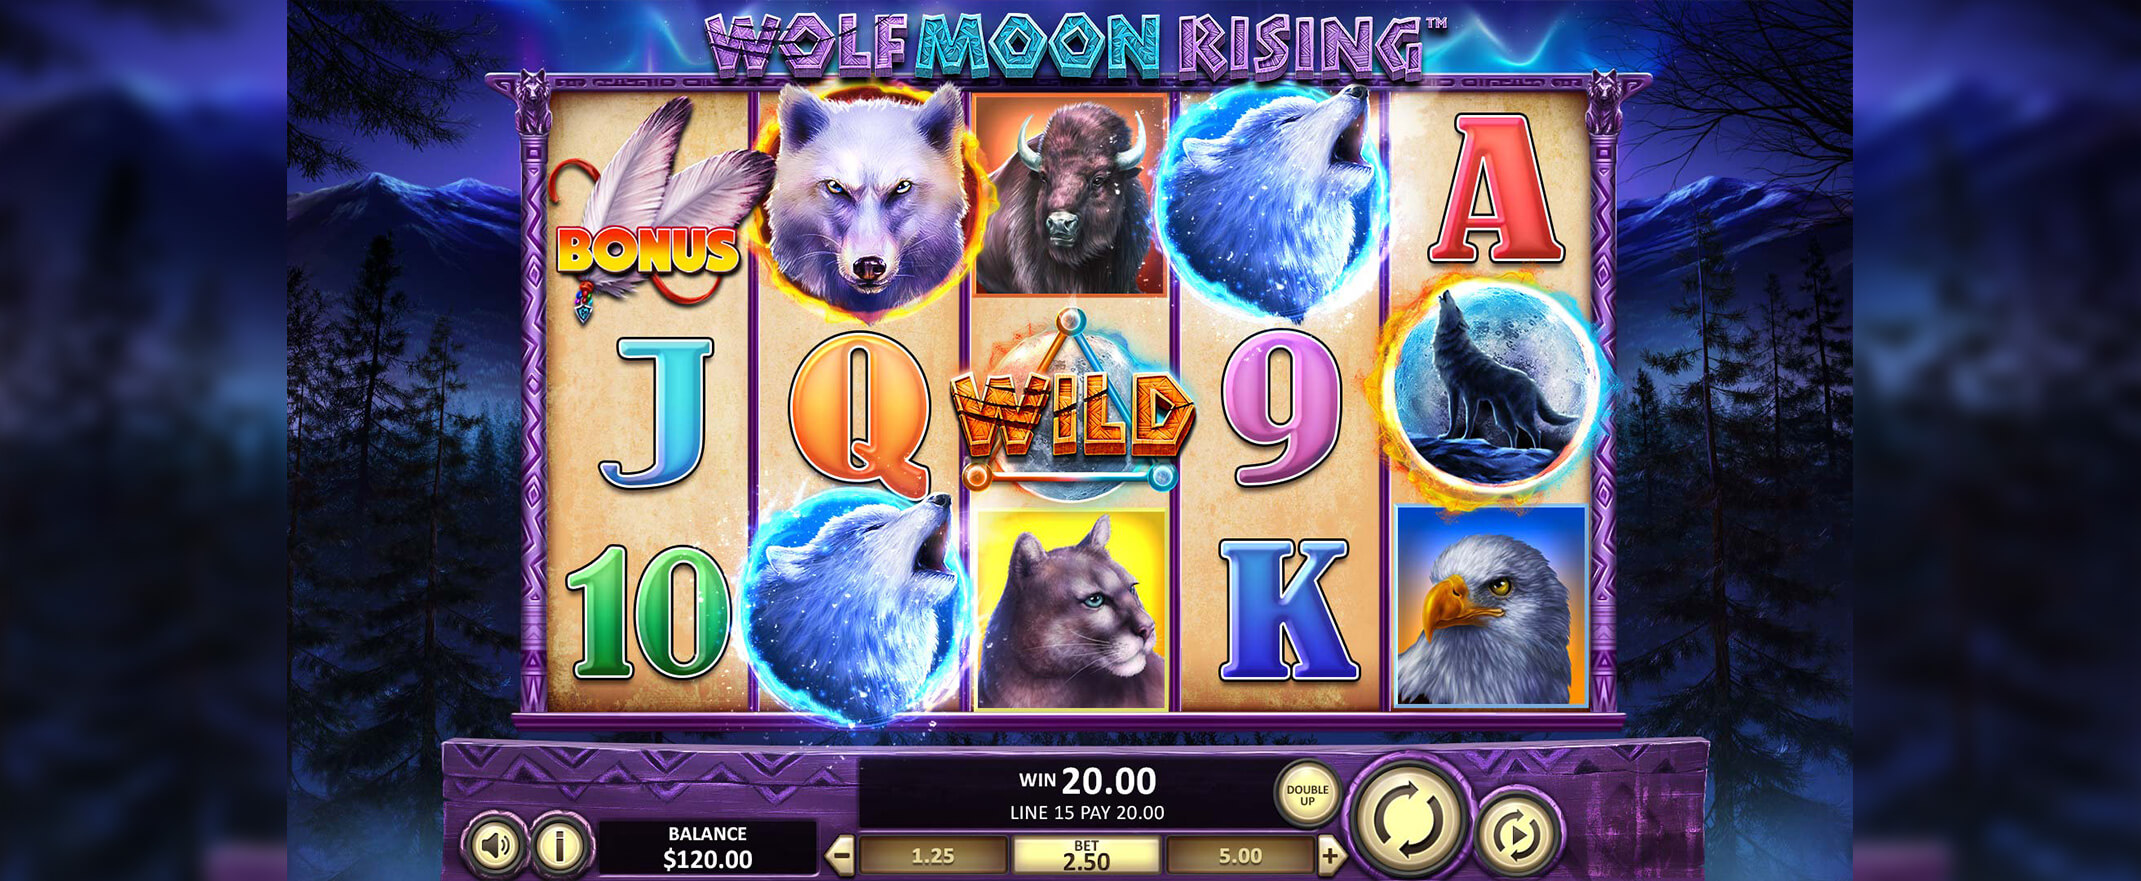 Wolf moon rising slot